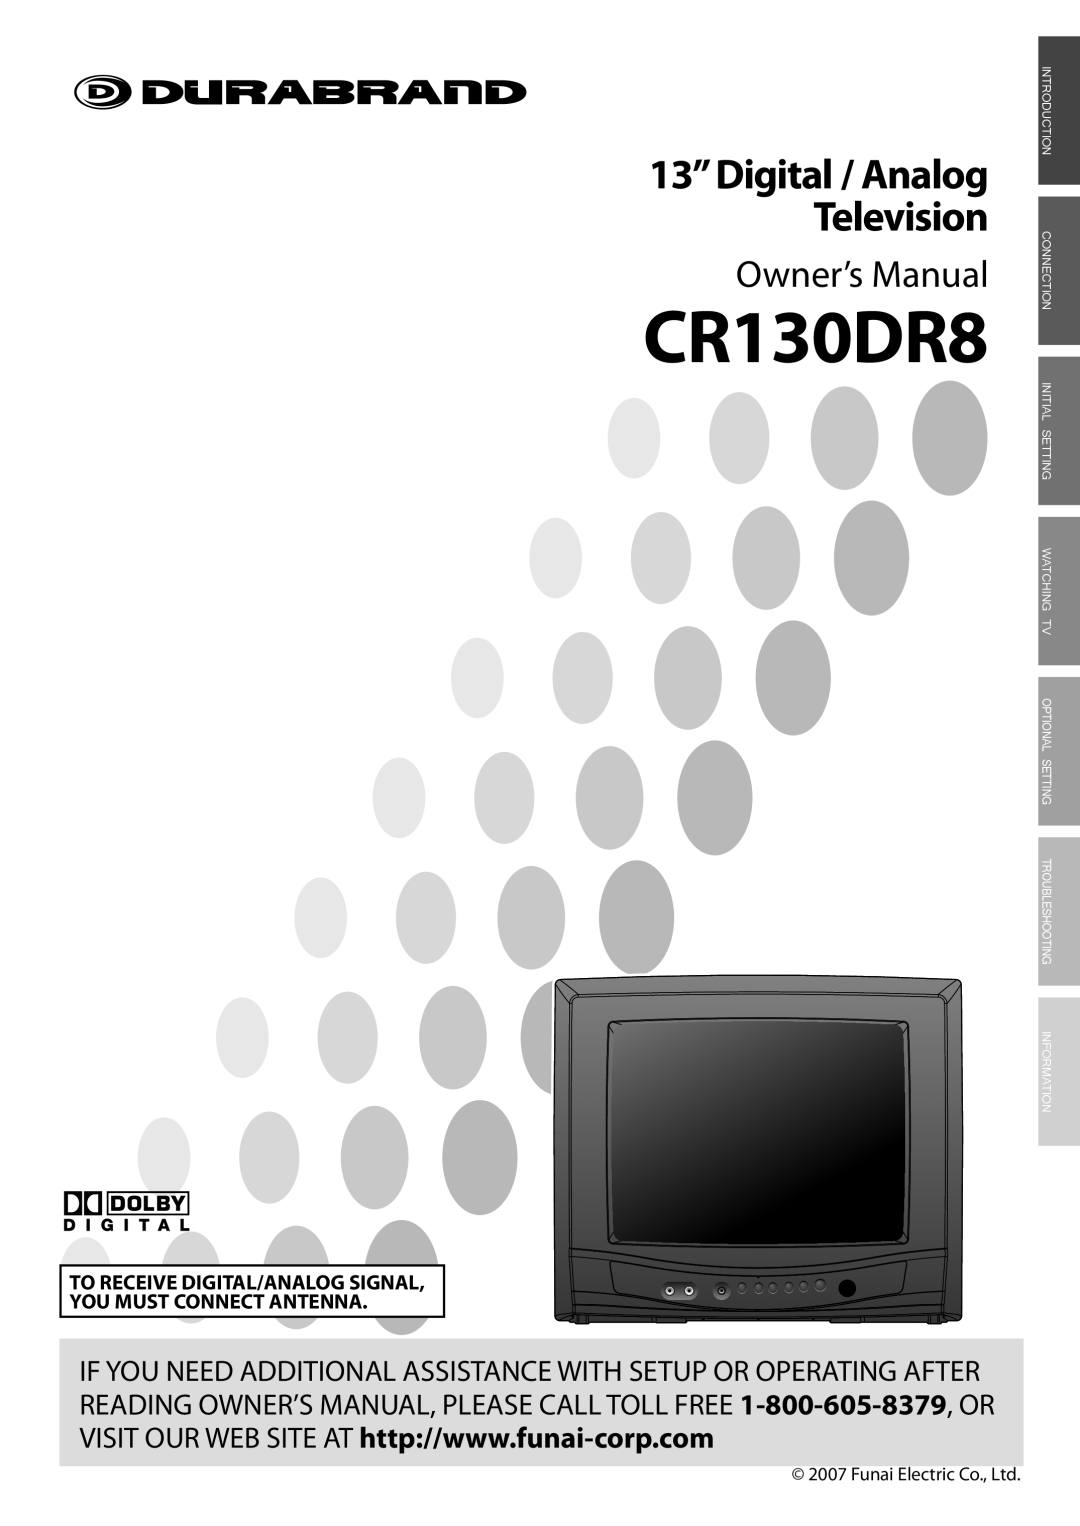 FUNAI CR130DR8 owner manual Owner’s Manual, 13”Digital / Analog Television 